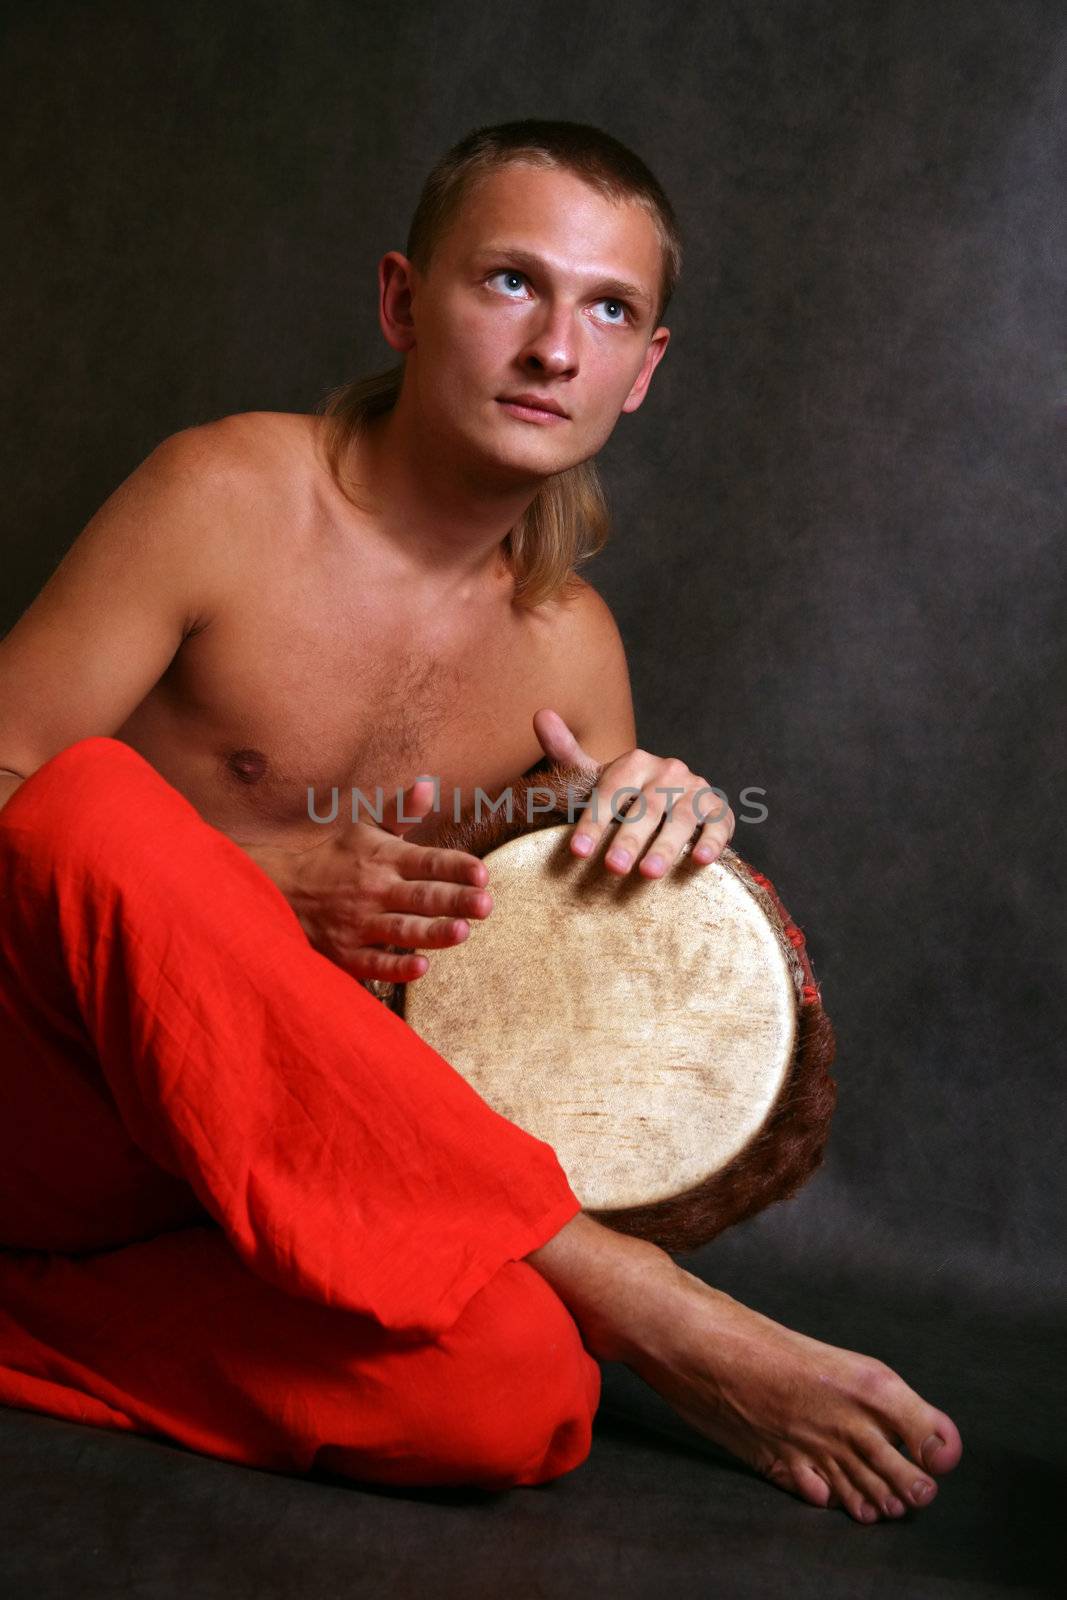 Man playing the nigerian drum in studio